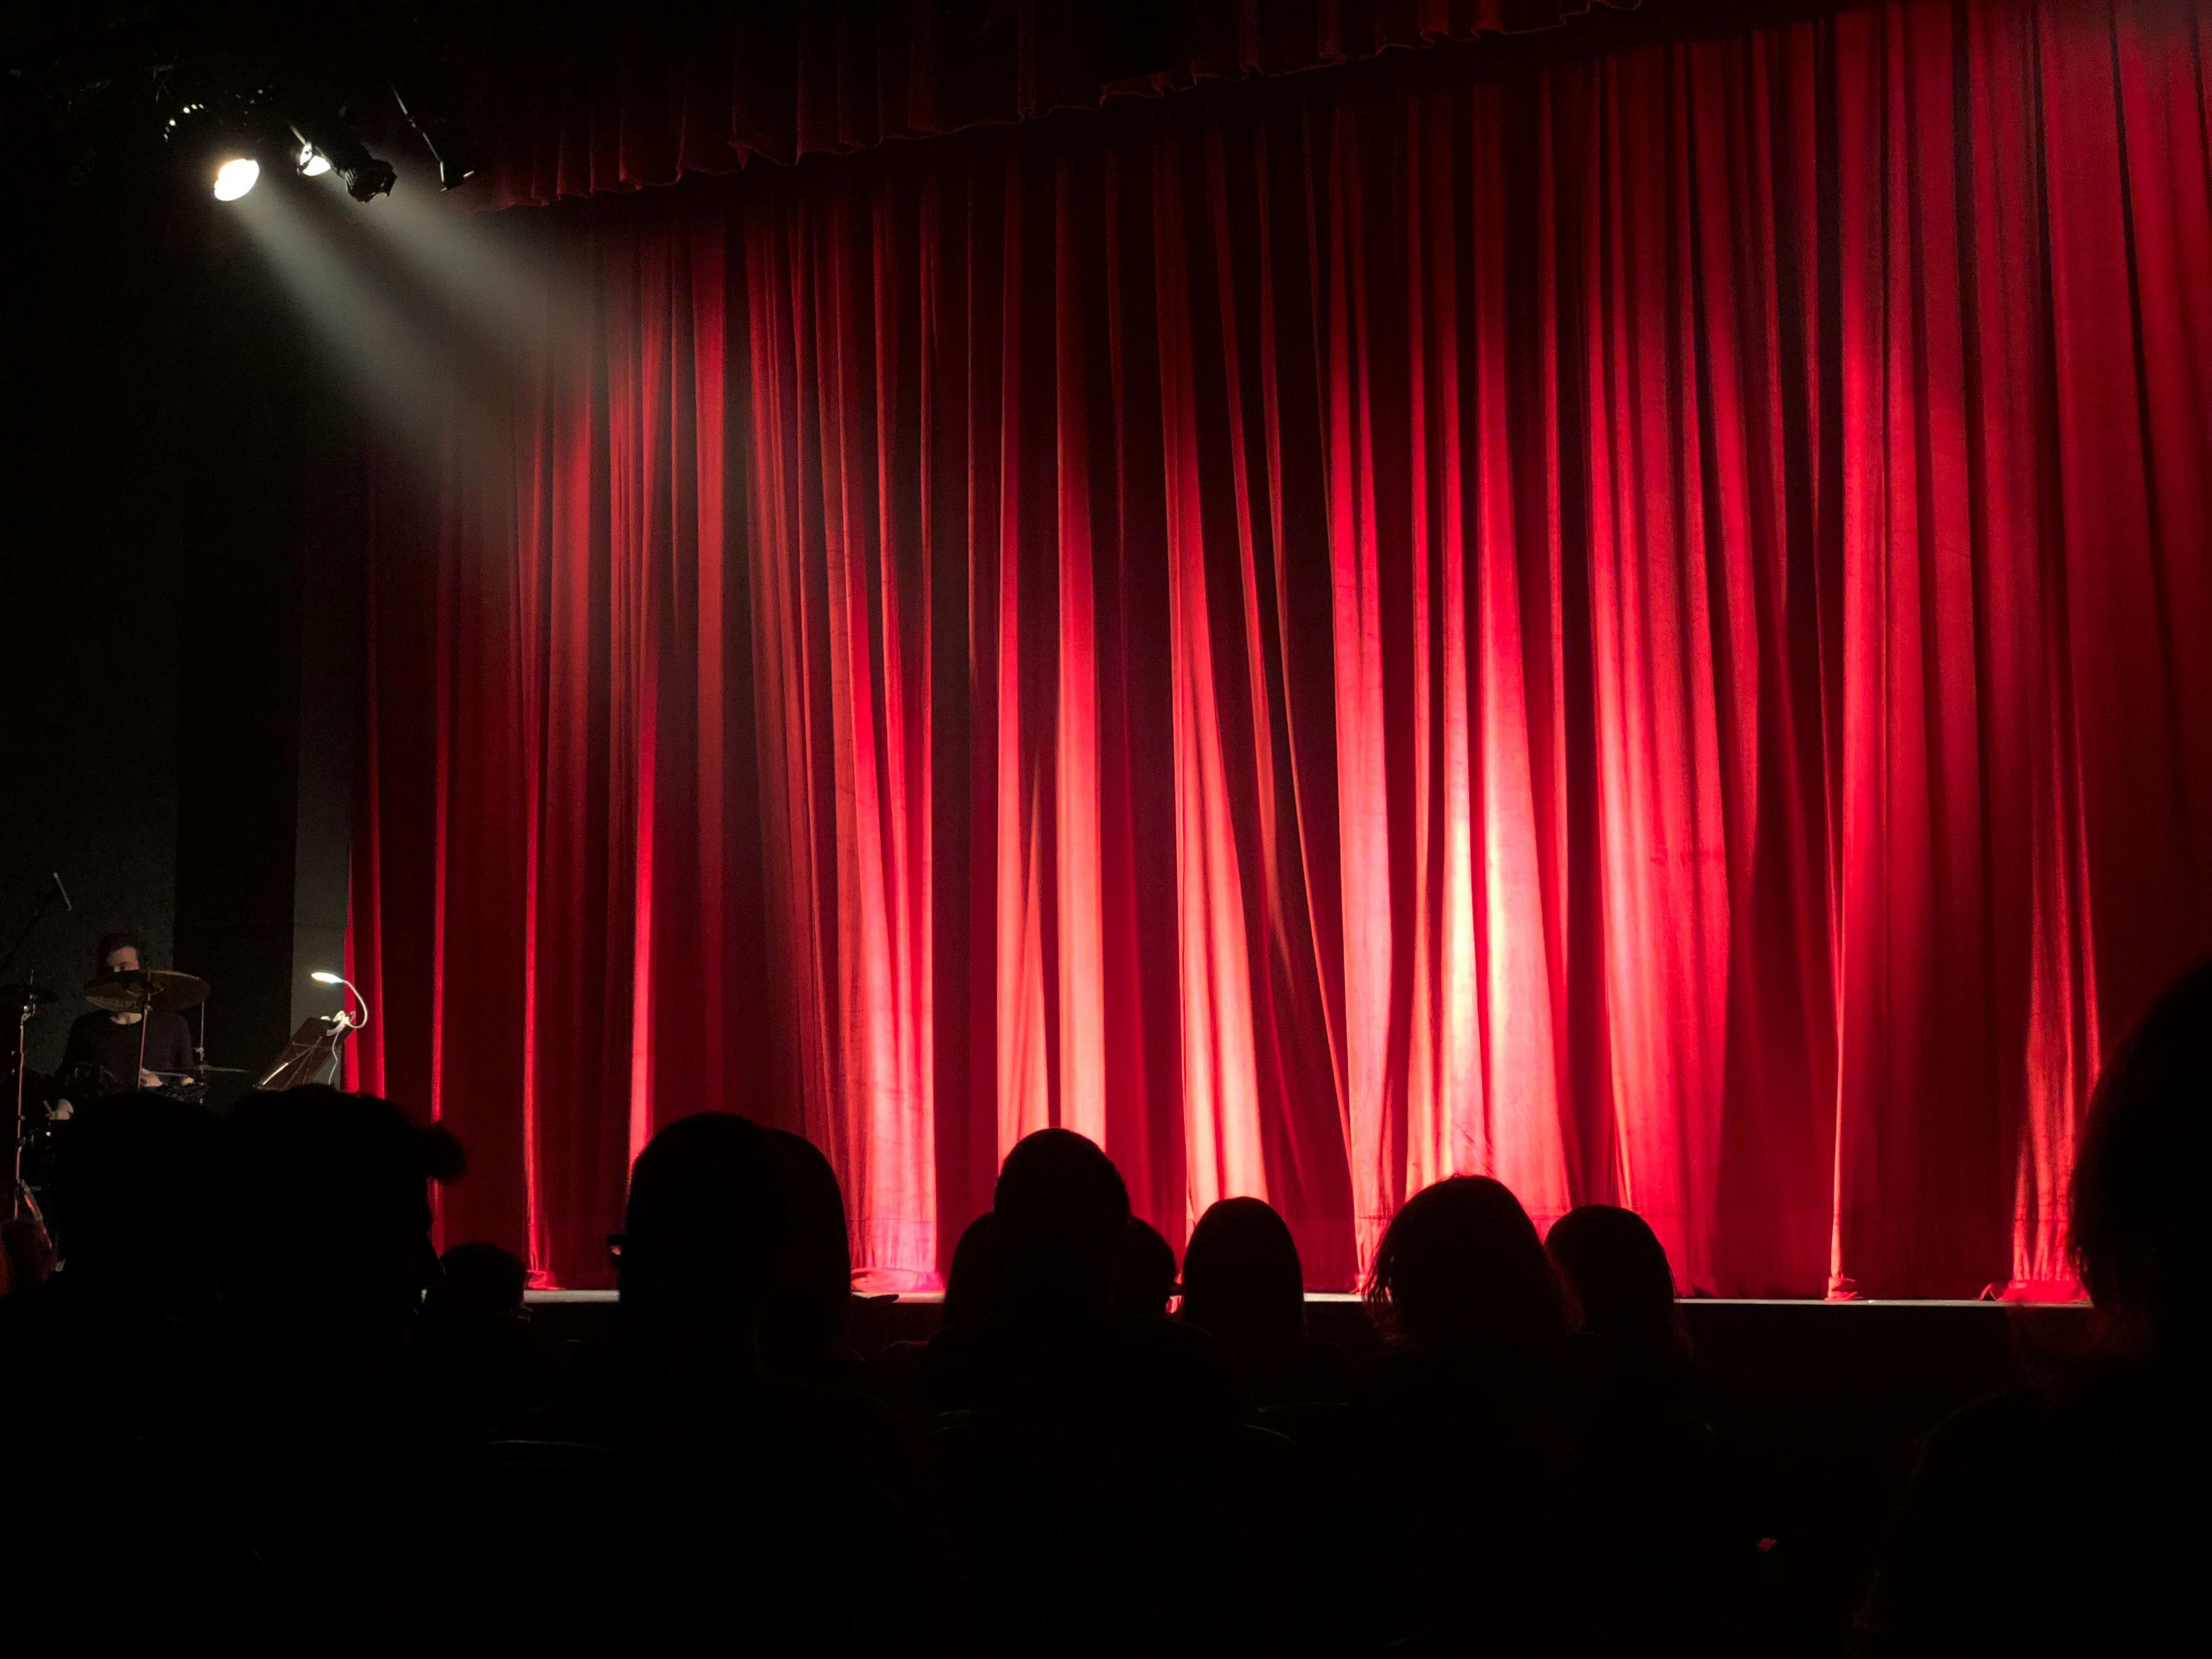 Movie Theater Curtain Theatre  Free photo on Pixabay  Pixabay